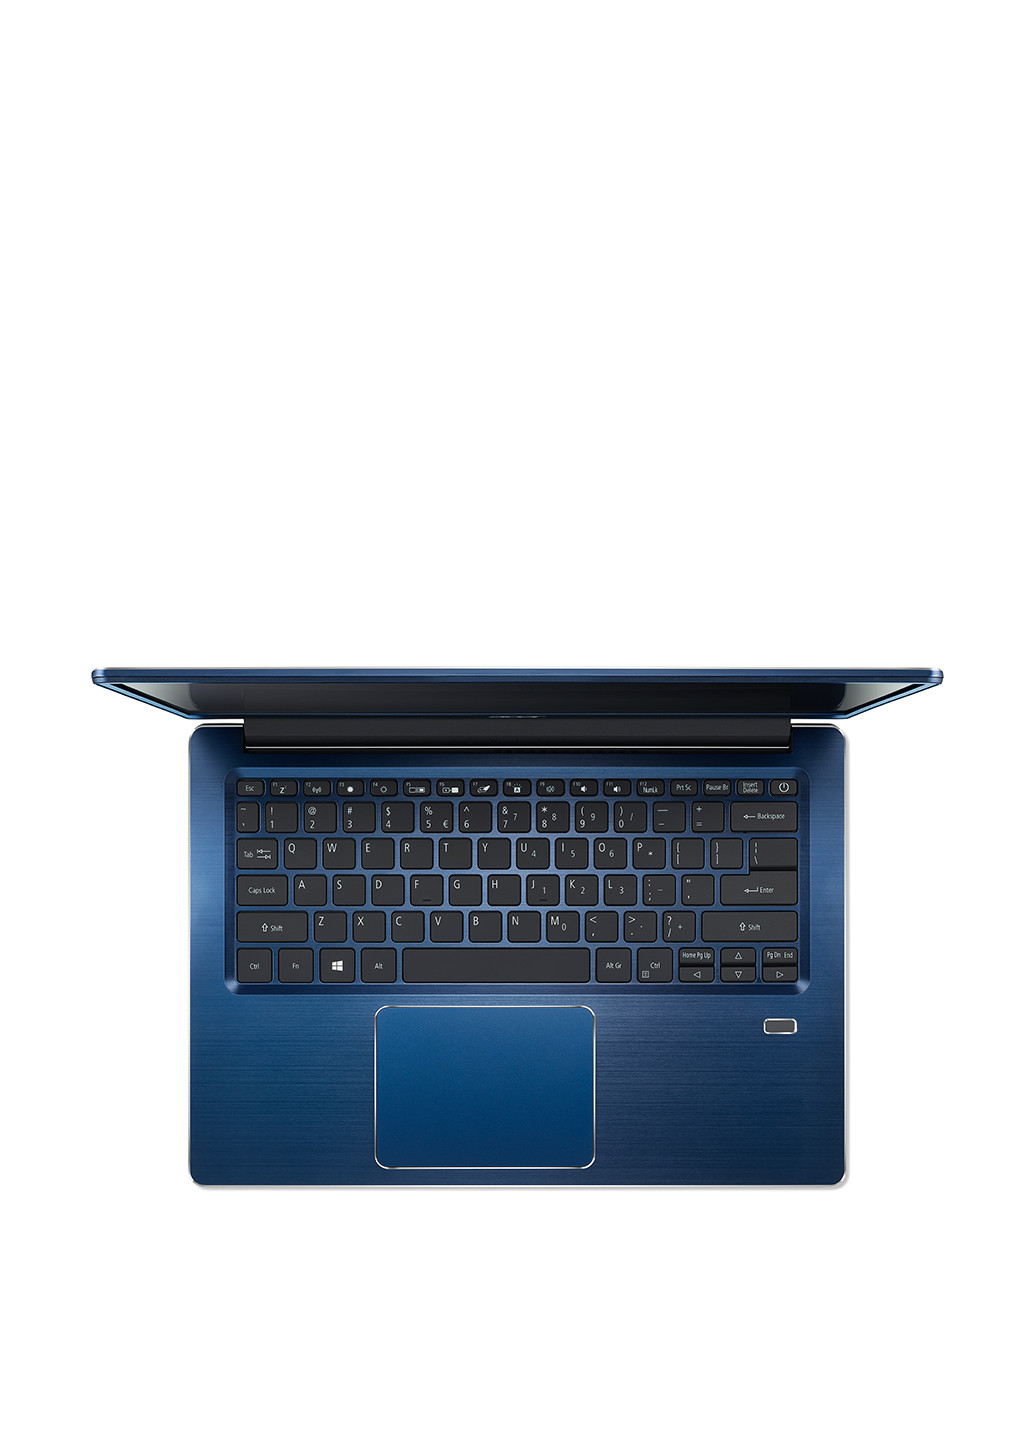 Ноутбук Stellar Blue Acer swift 3 sf314-56-3160 (nx.h4eeu.006) (130035396)